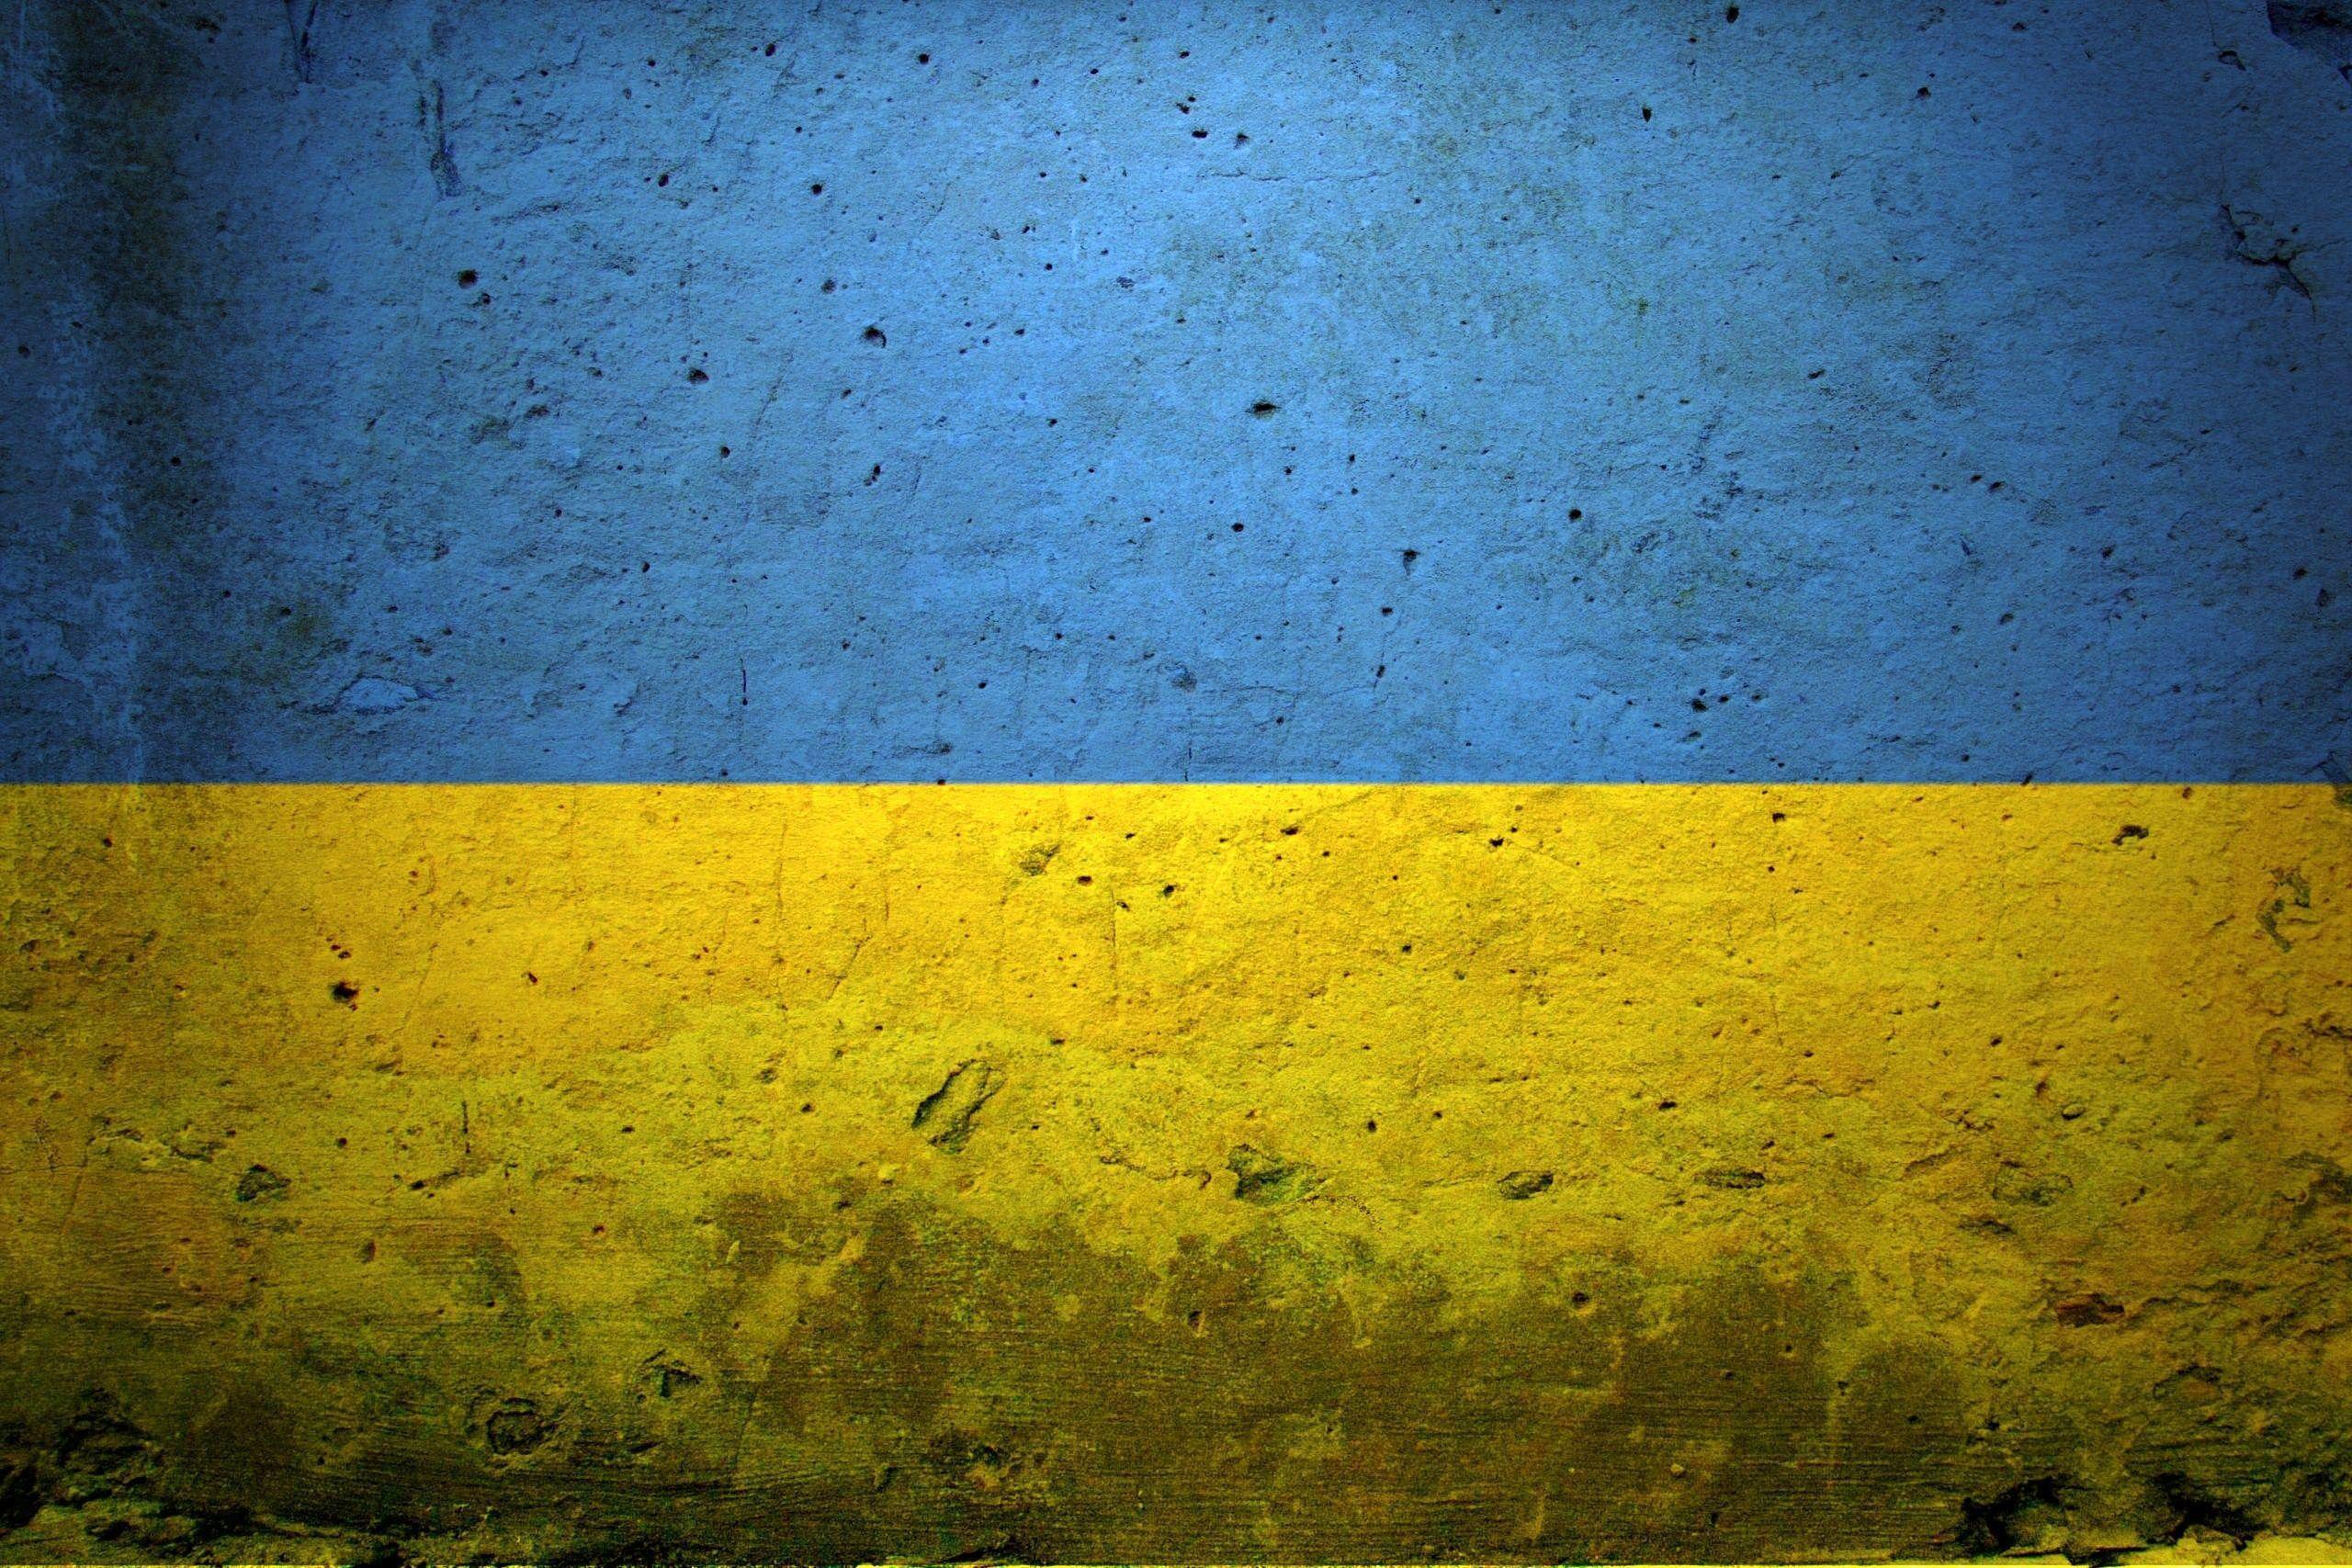 Ukraine flag wallpaper. Wallpaper Wide HD